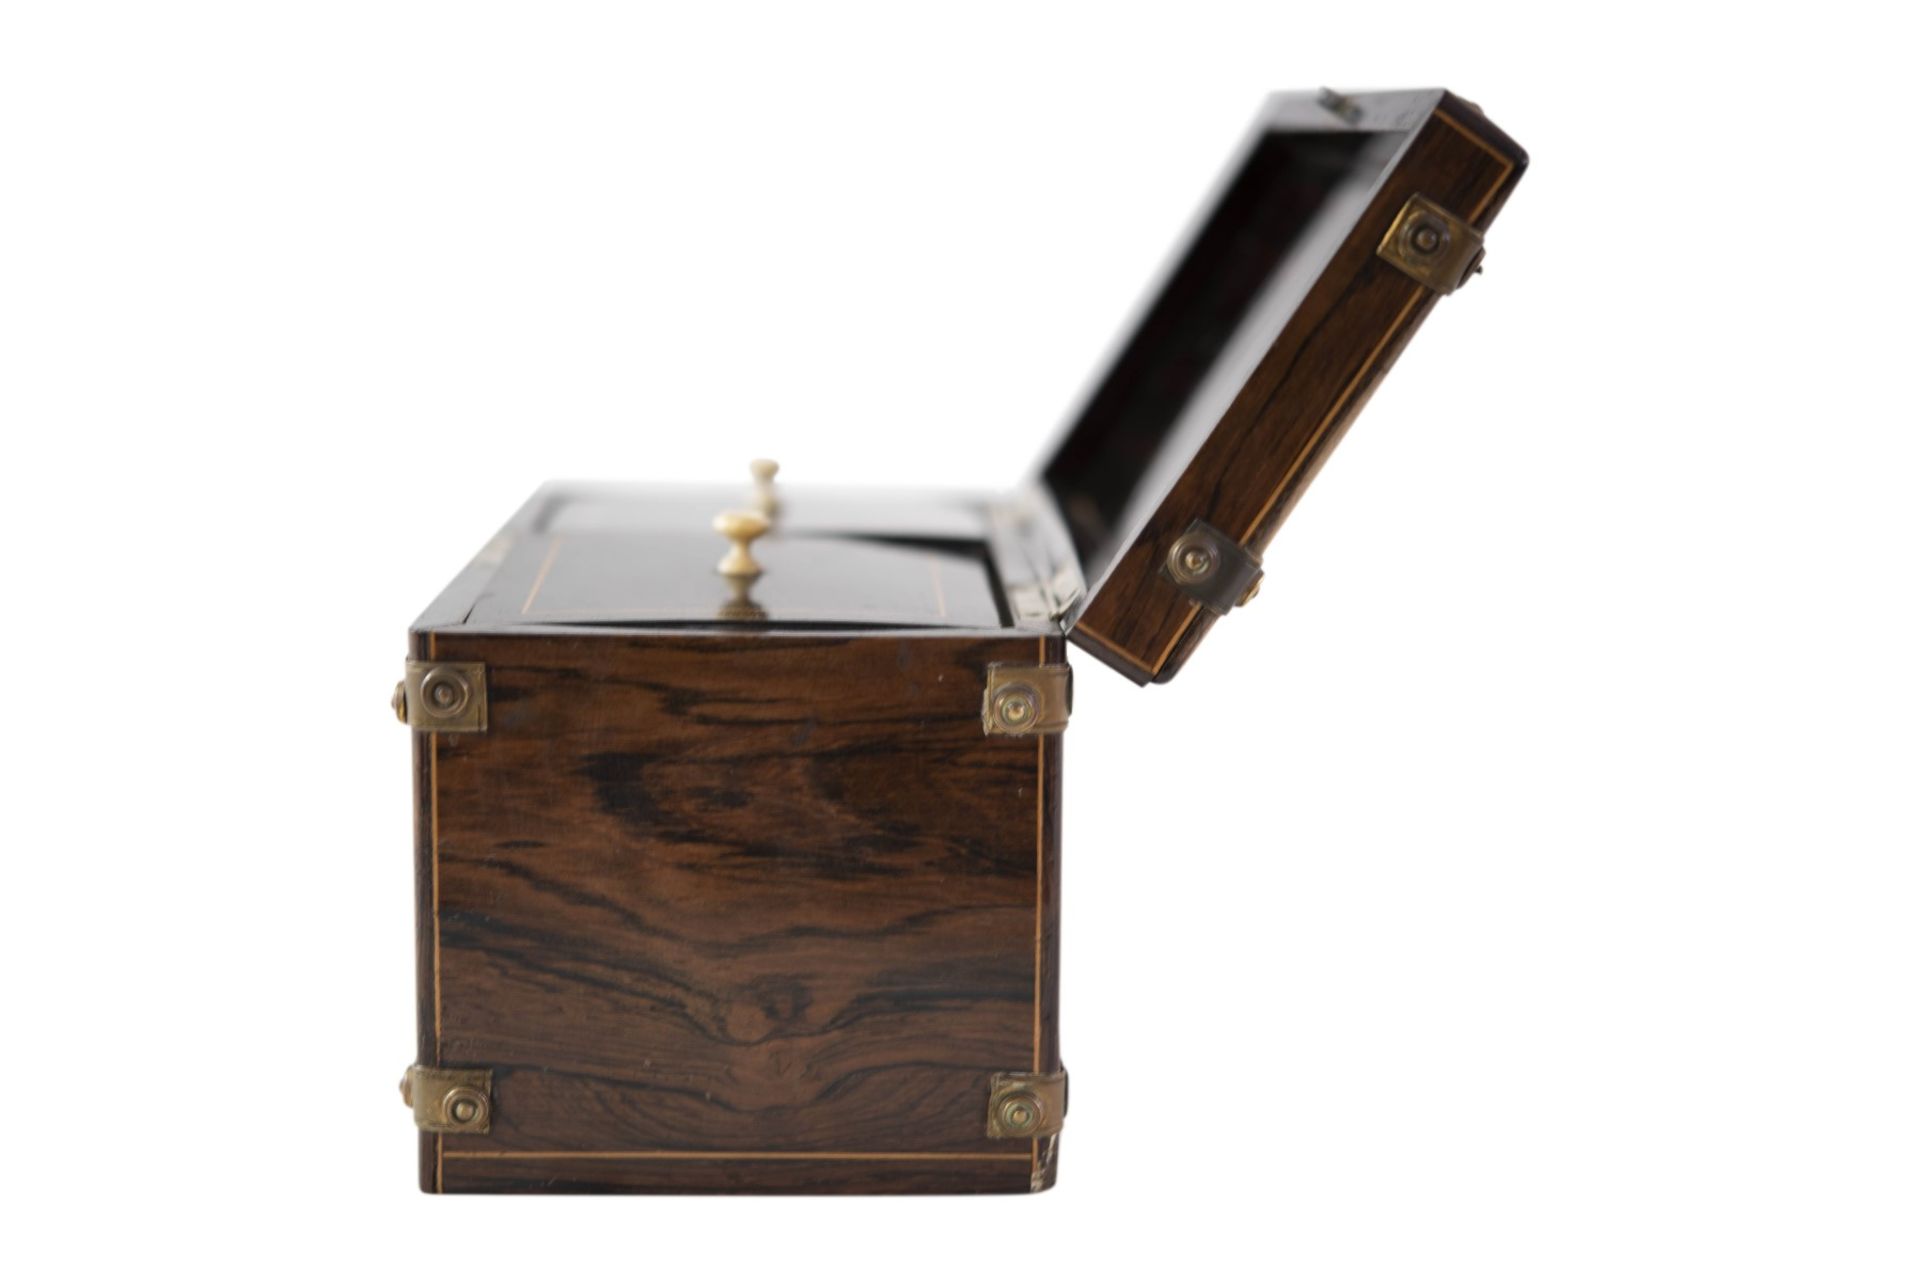 Jewel box, wood, brass fittings - Image 7 of 8